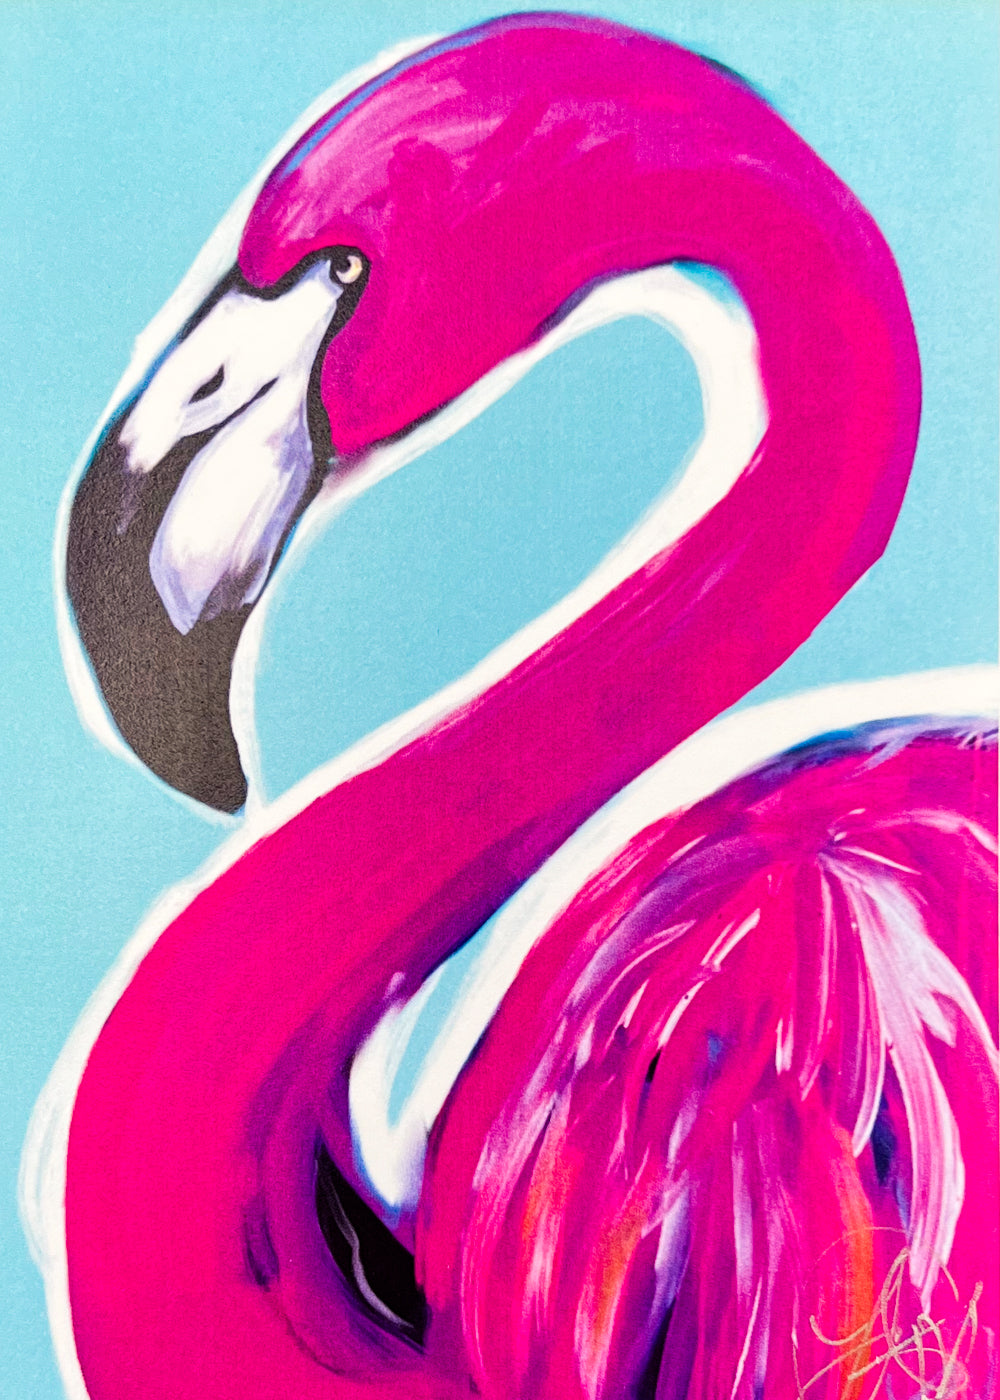 Portrait Flamingo